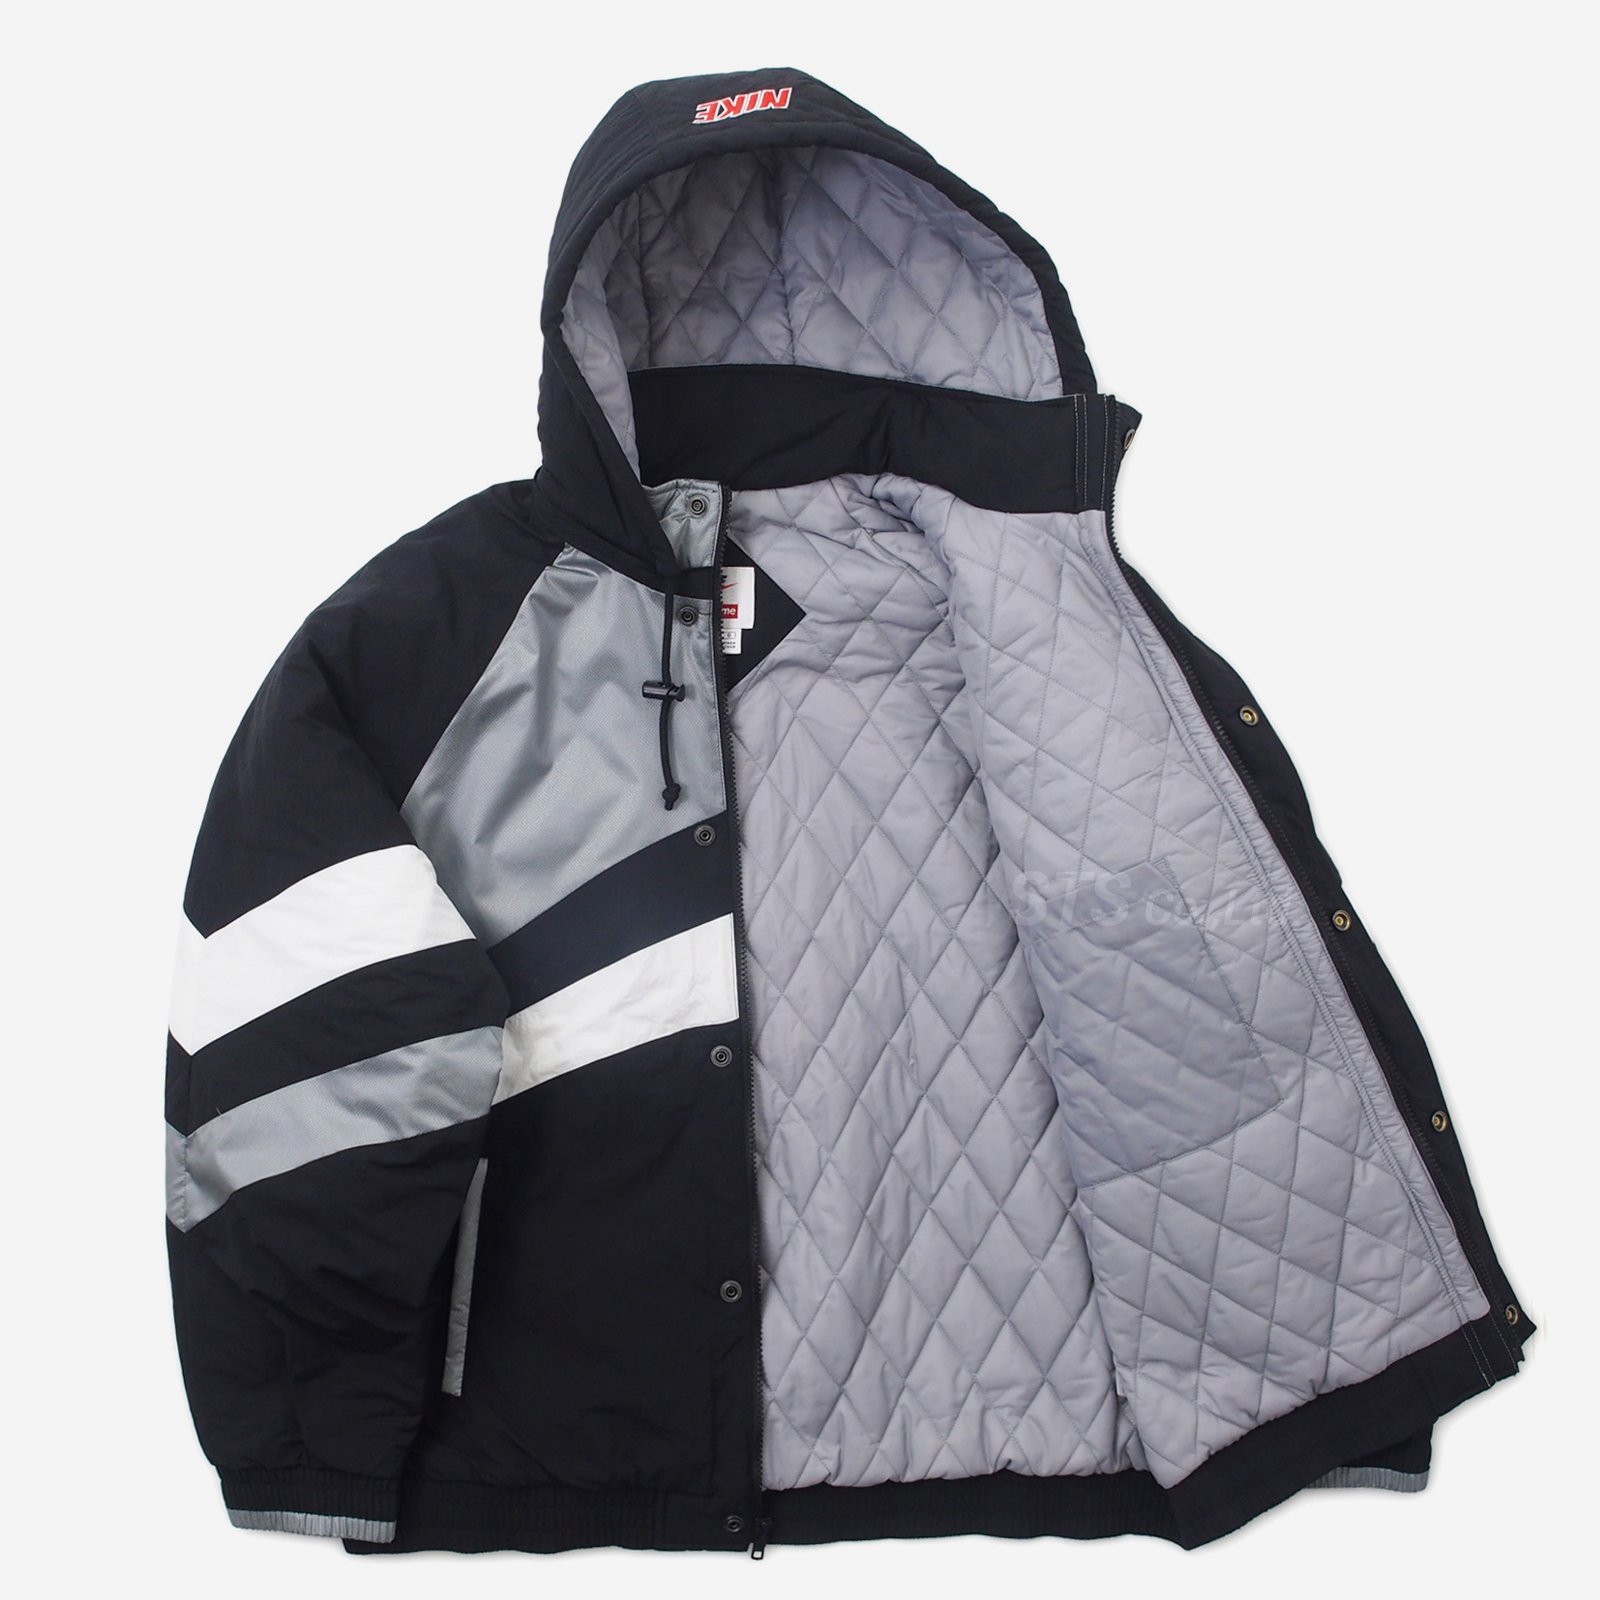 Supreme/Nike Hooded Sport Jacket - UG.SHAFT